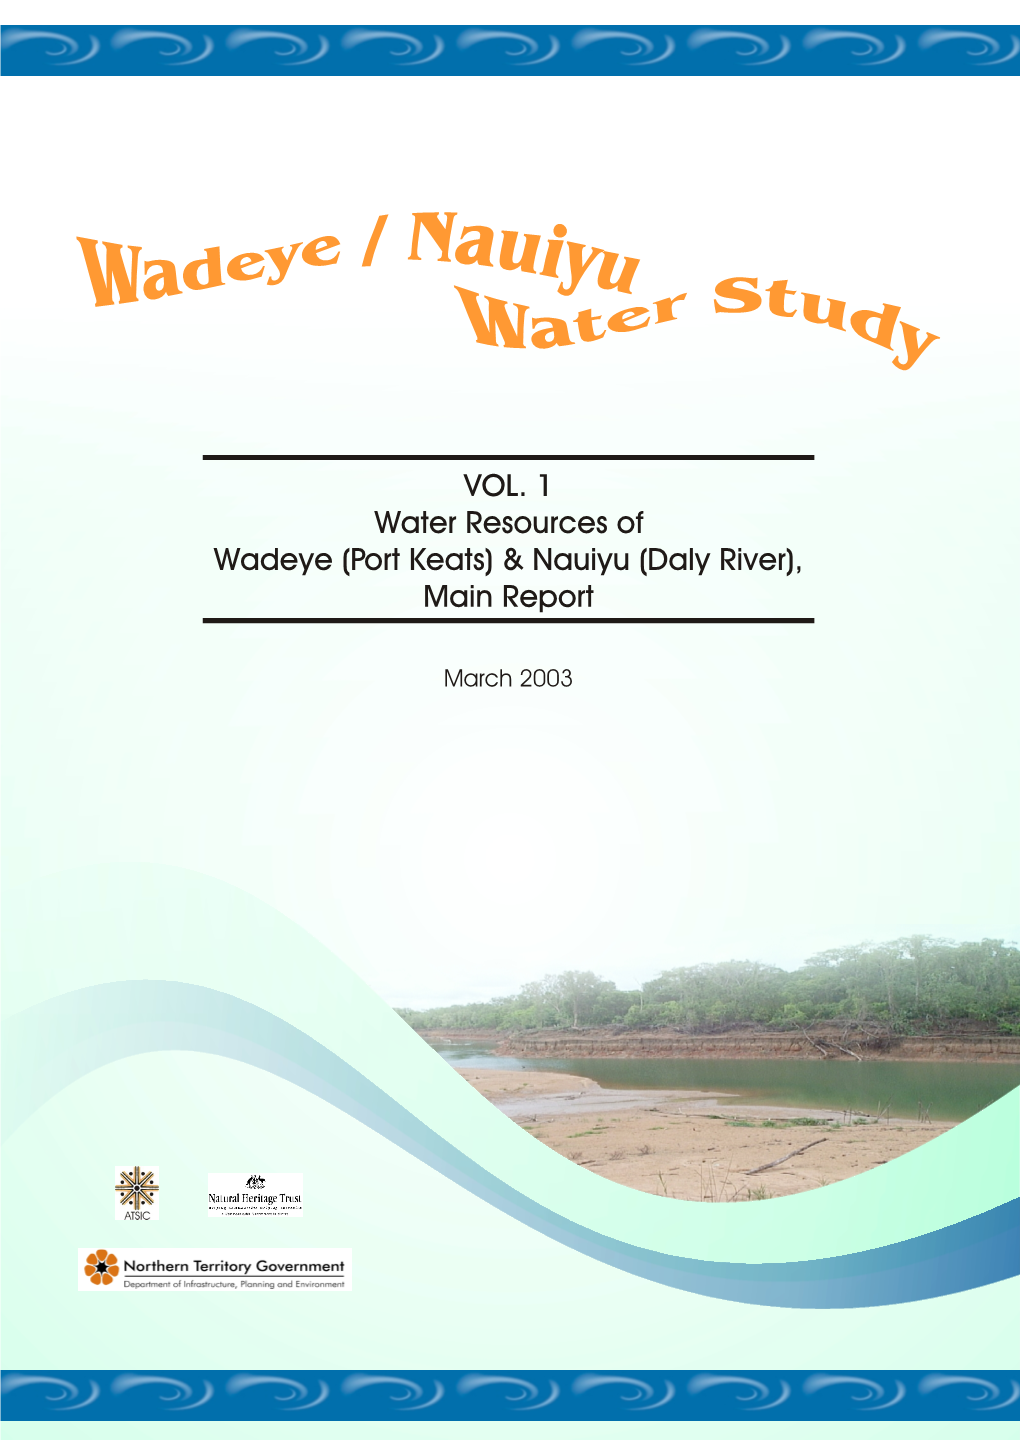 VOL. 1 Water Resources of Wadeye (Port Keats) & Nauiyu (Daly River)